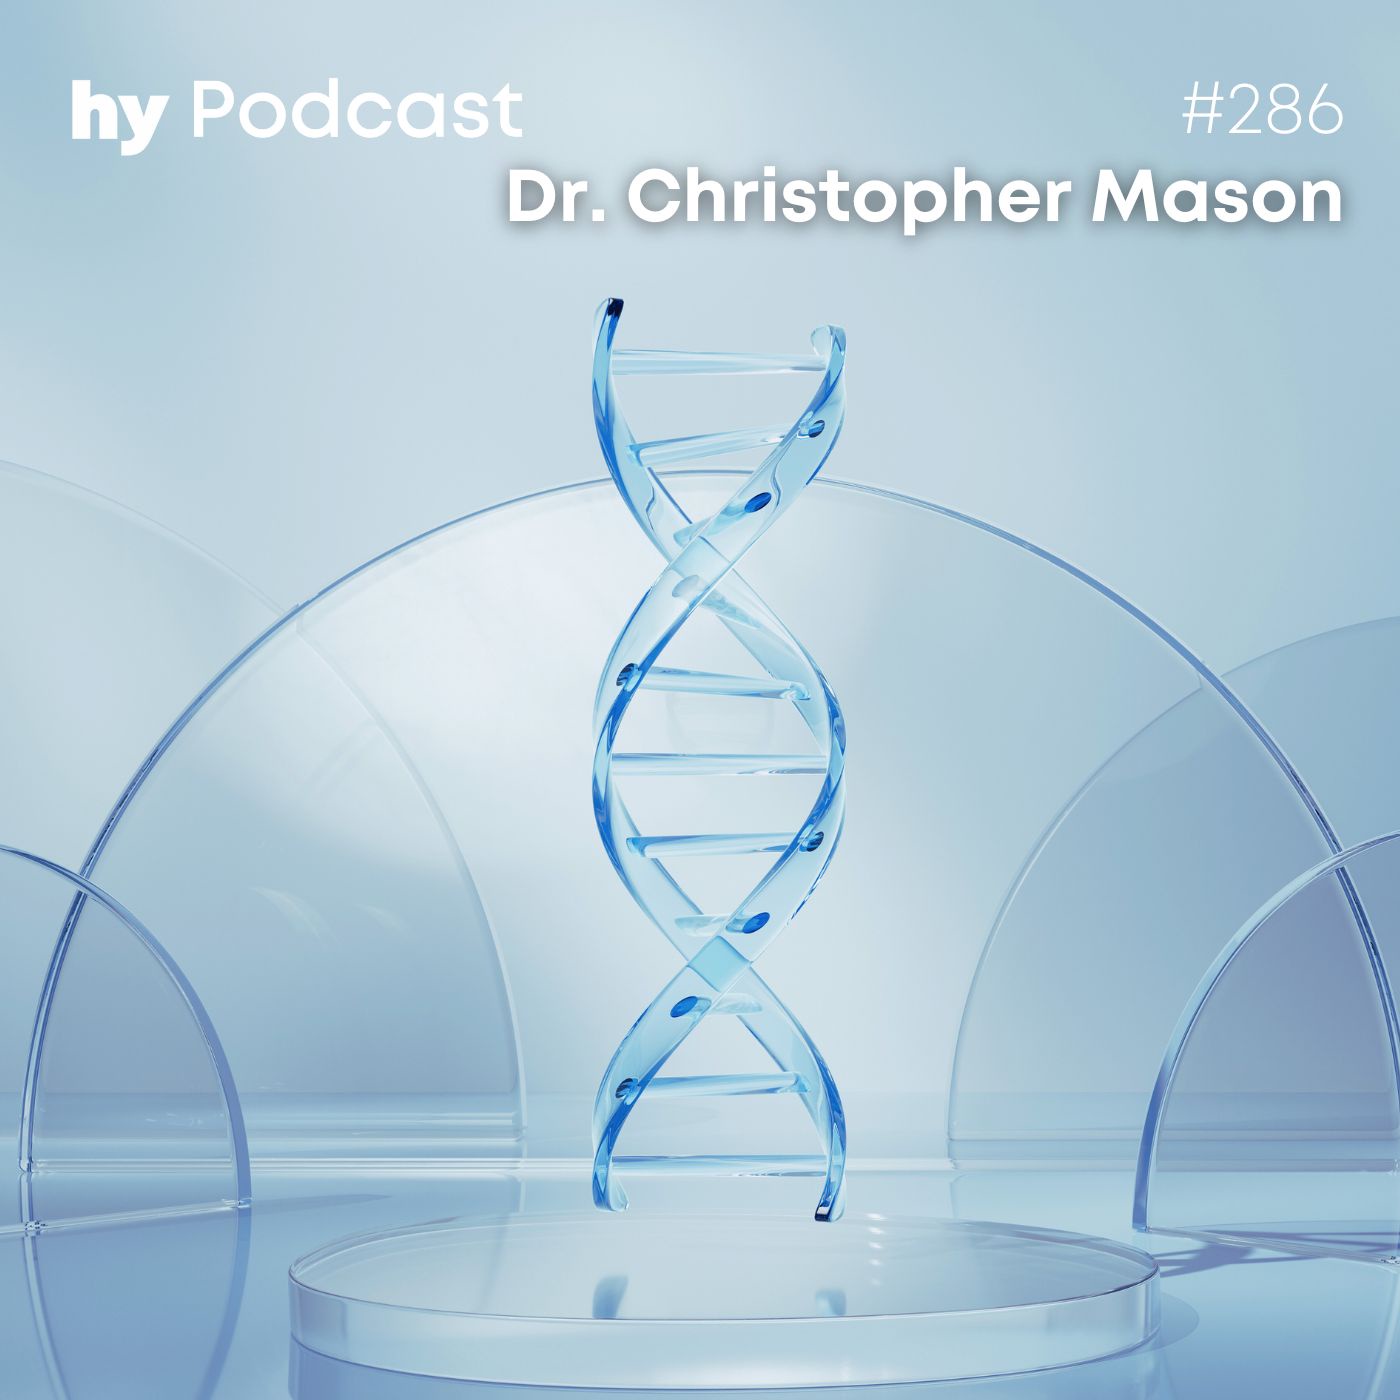 Folge 286 mit Christopher Mason: Krebs mit moderner Biologie bekämpfen